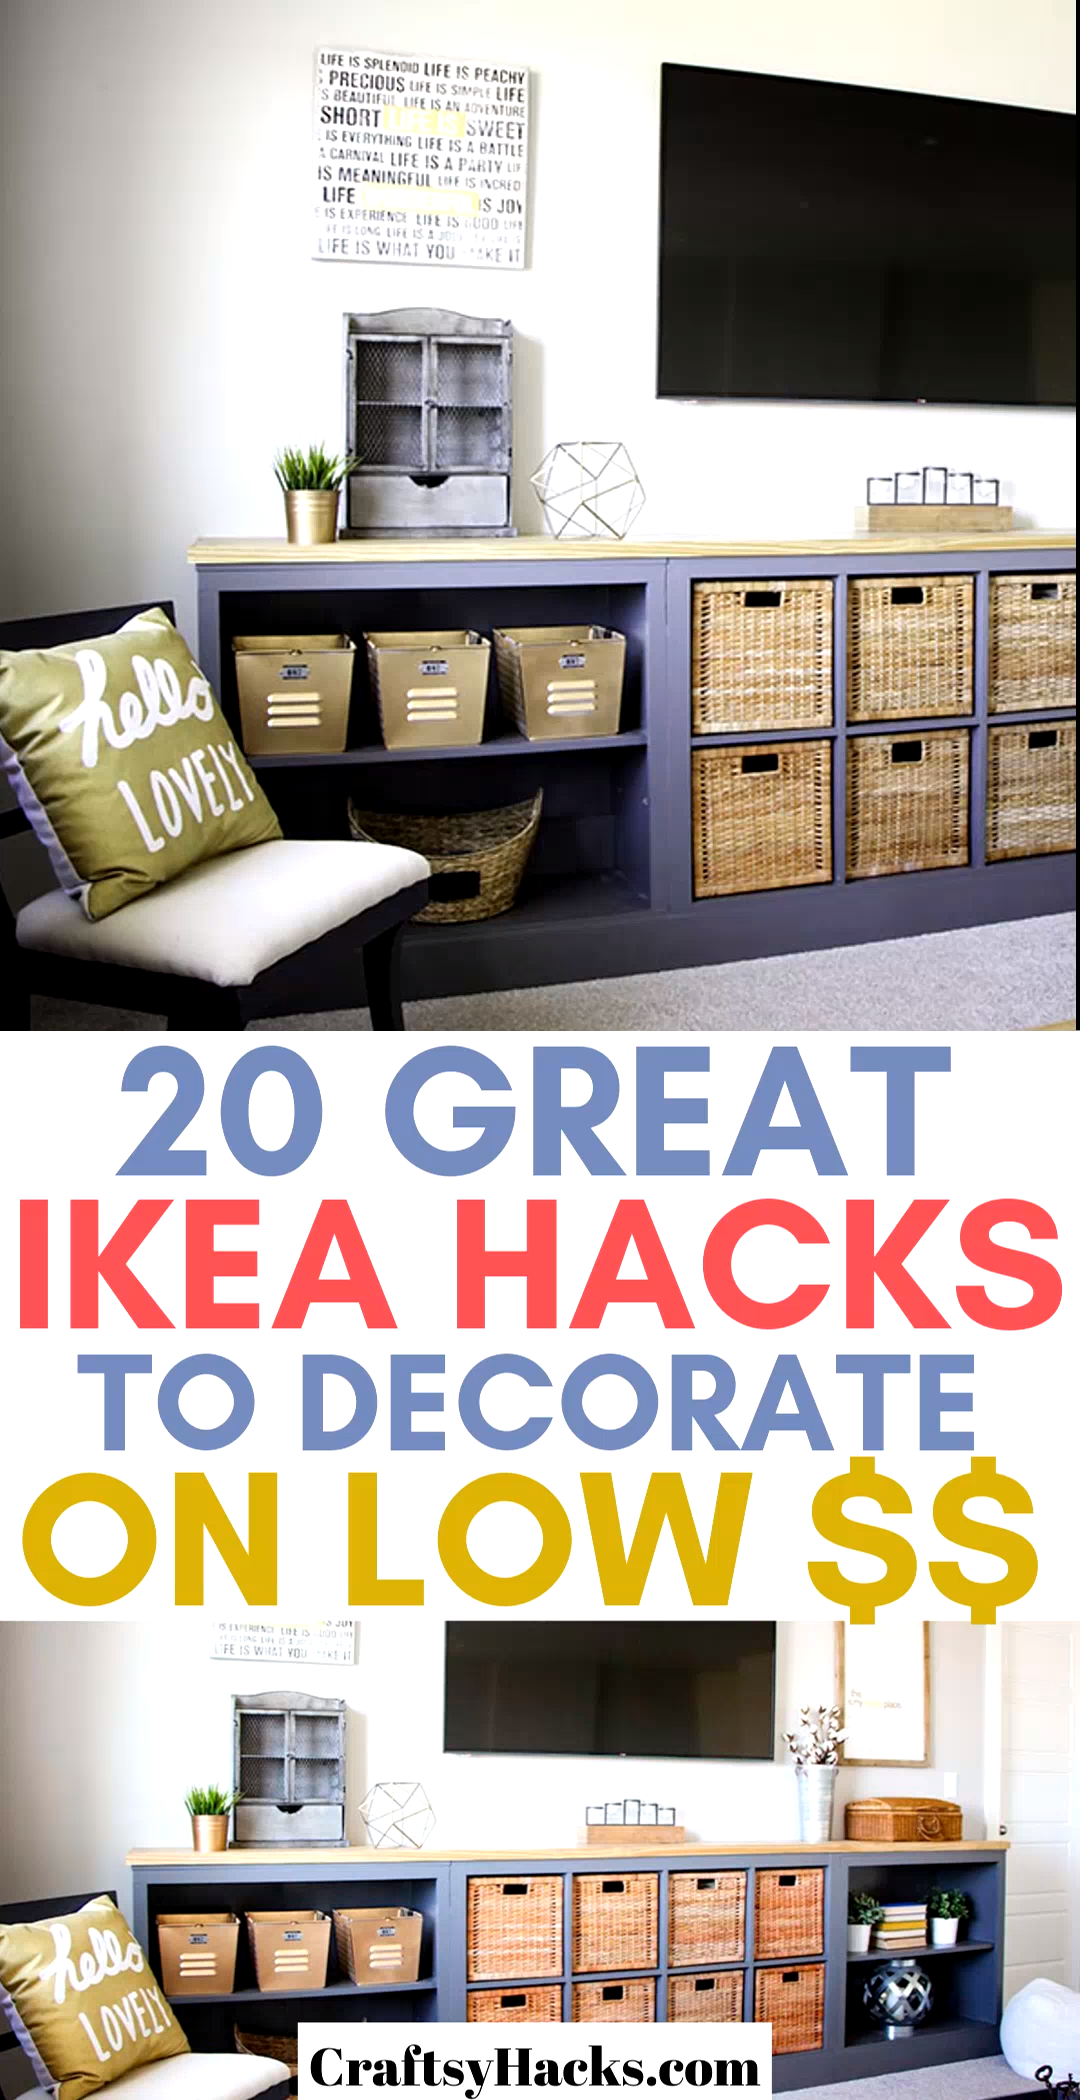 20 Great Ikea Hacks to Decorate on Low $$ - 20 Great Ikea Hacks to Decorate on Low $$ -   19 diy Apartment decorations ideas